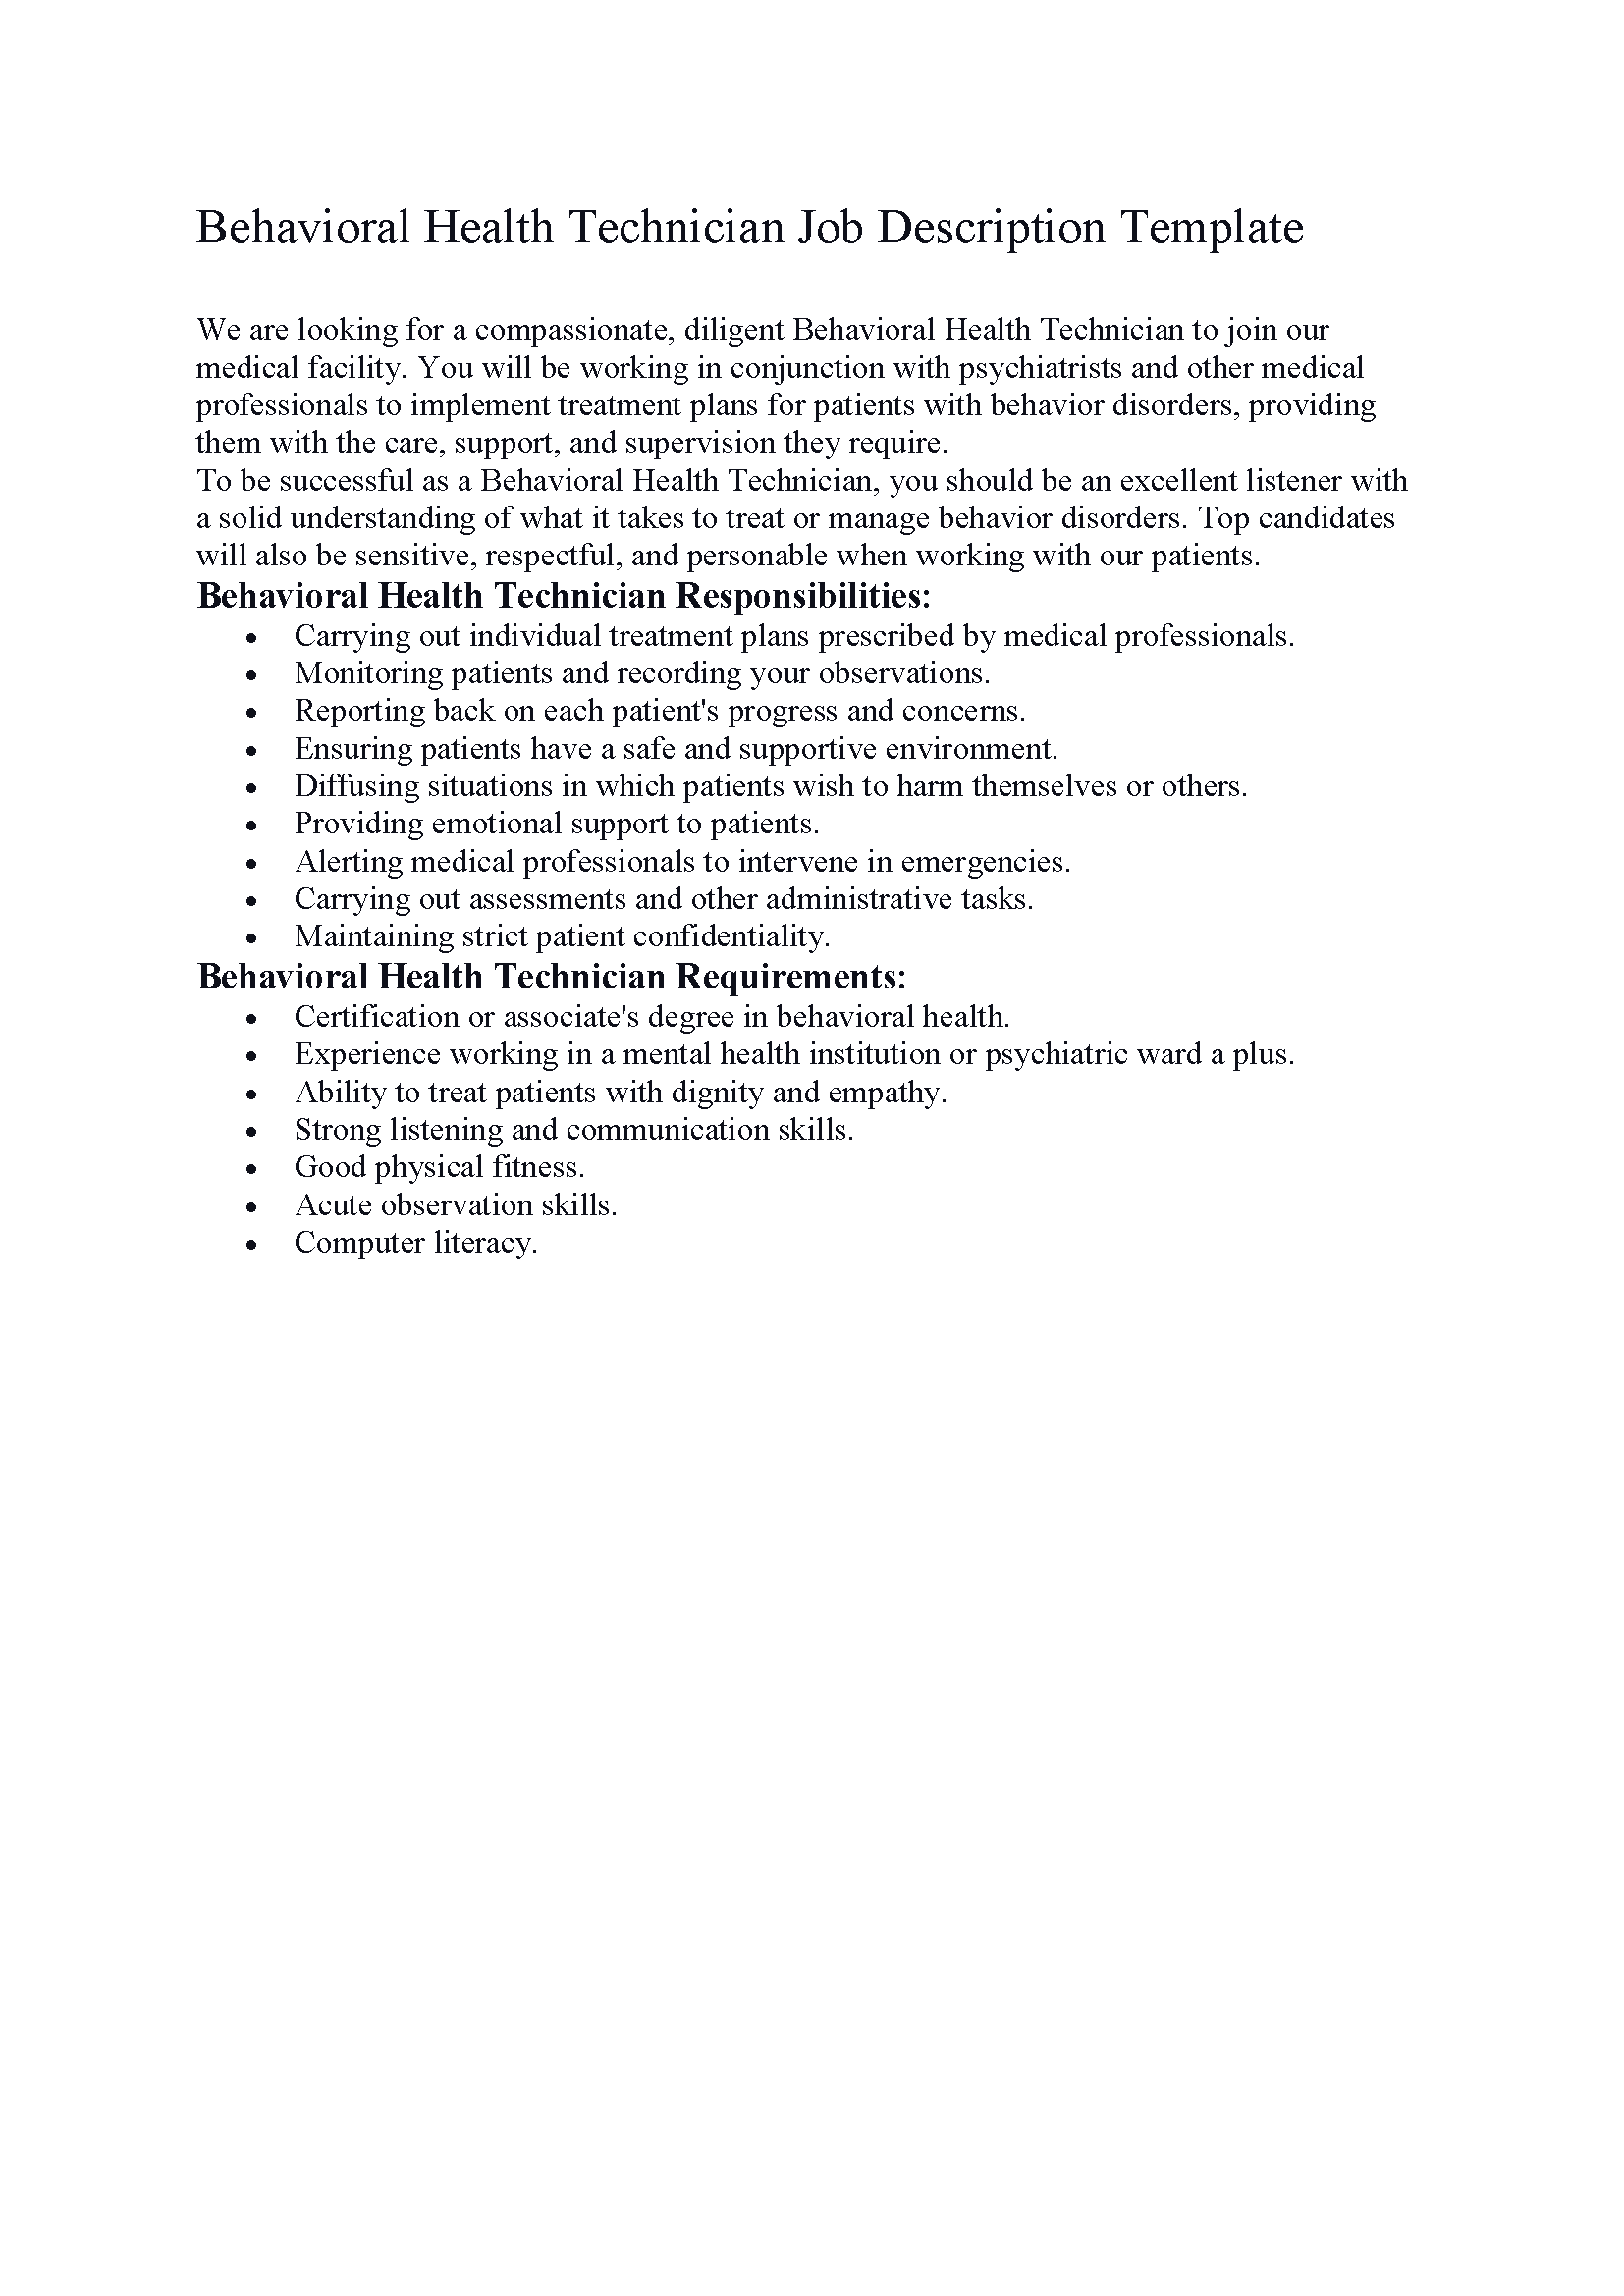 Behavioral Health Technician Job Description Template